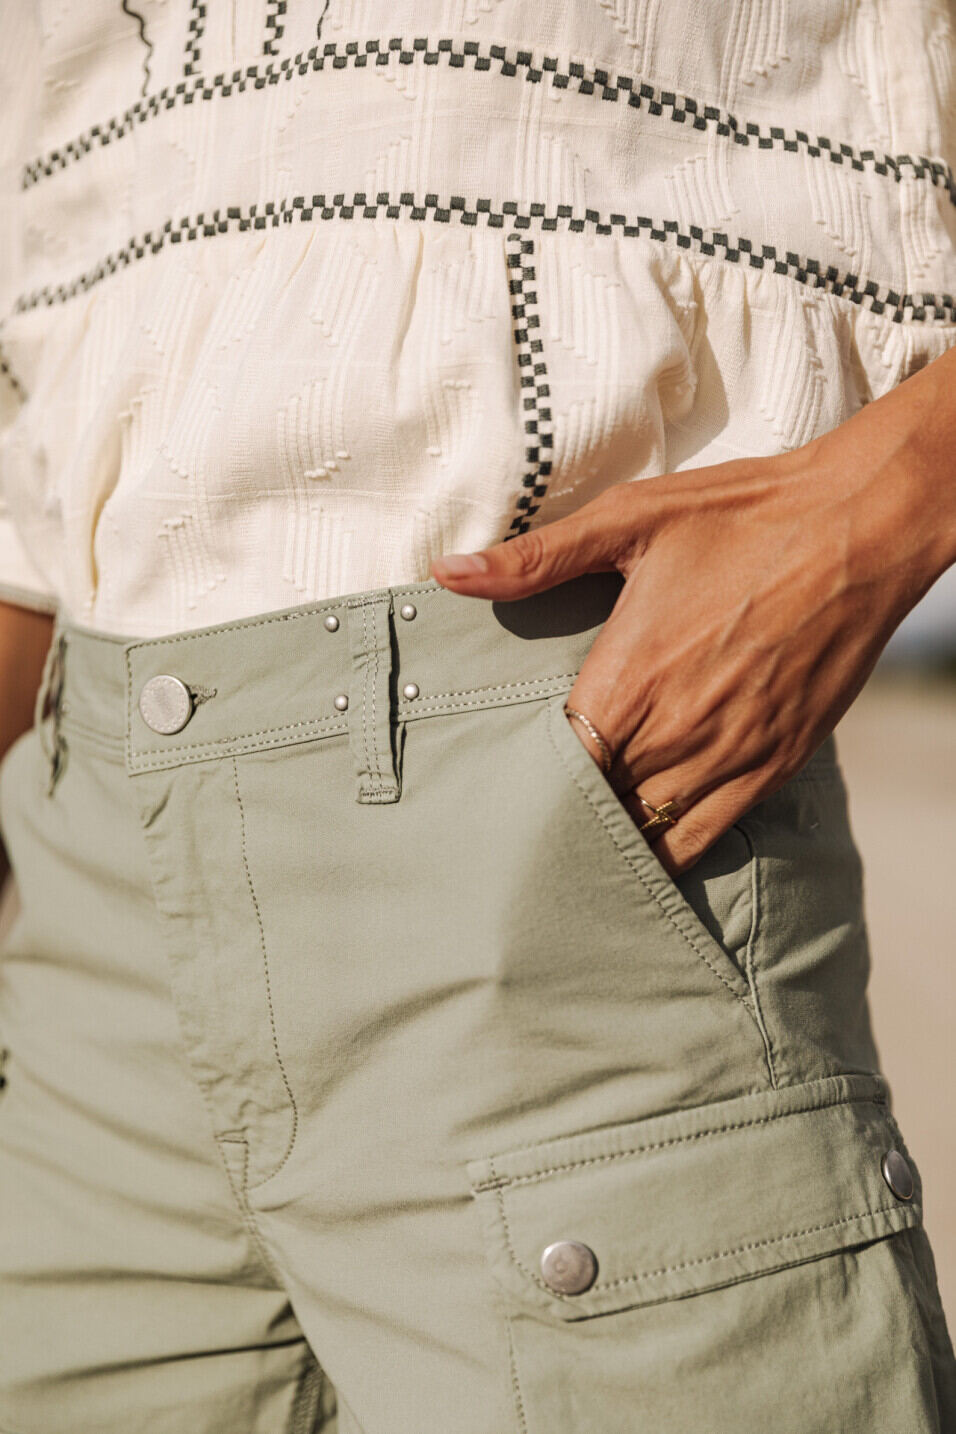 Cargo shorts Woman Alana Calvi Lily pad | Freeman T. Porter